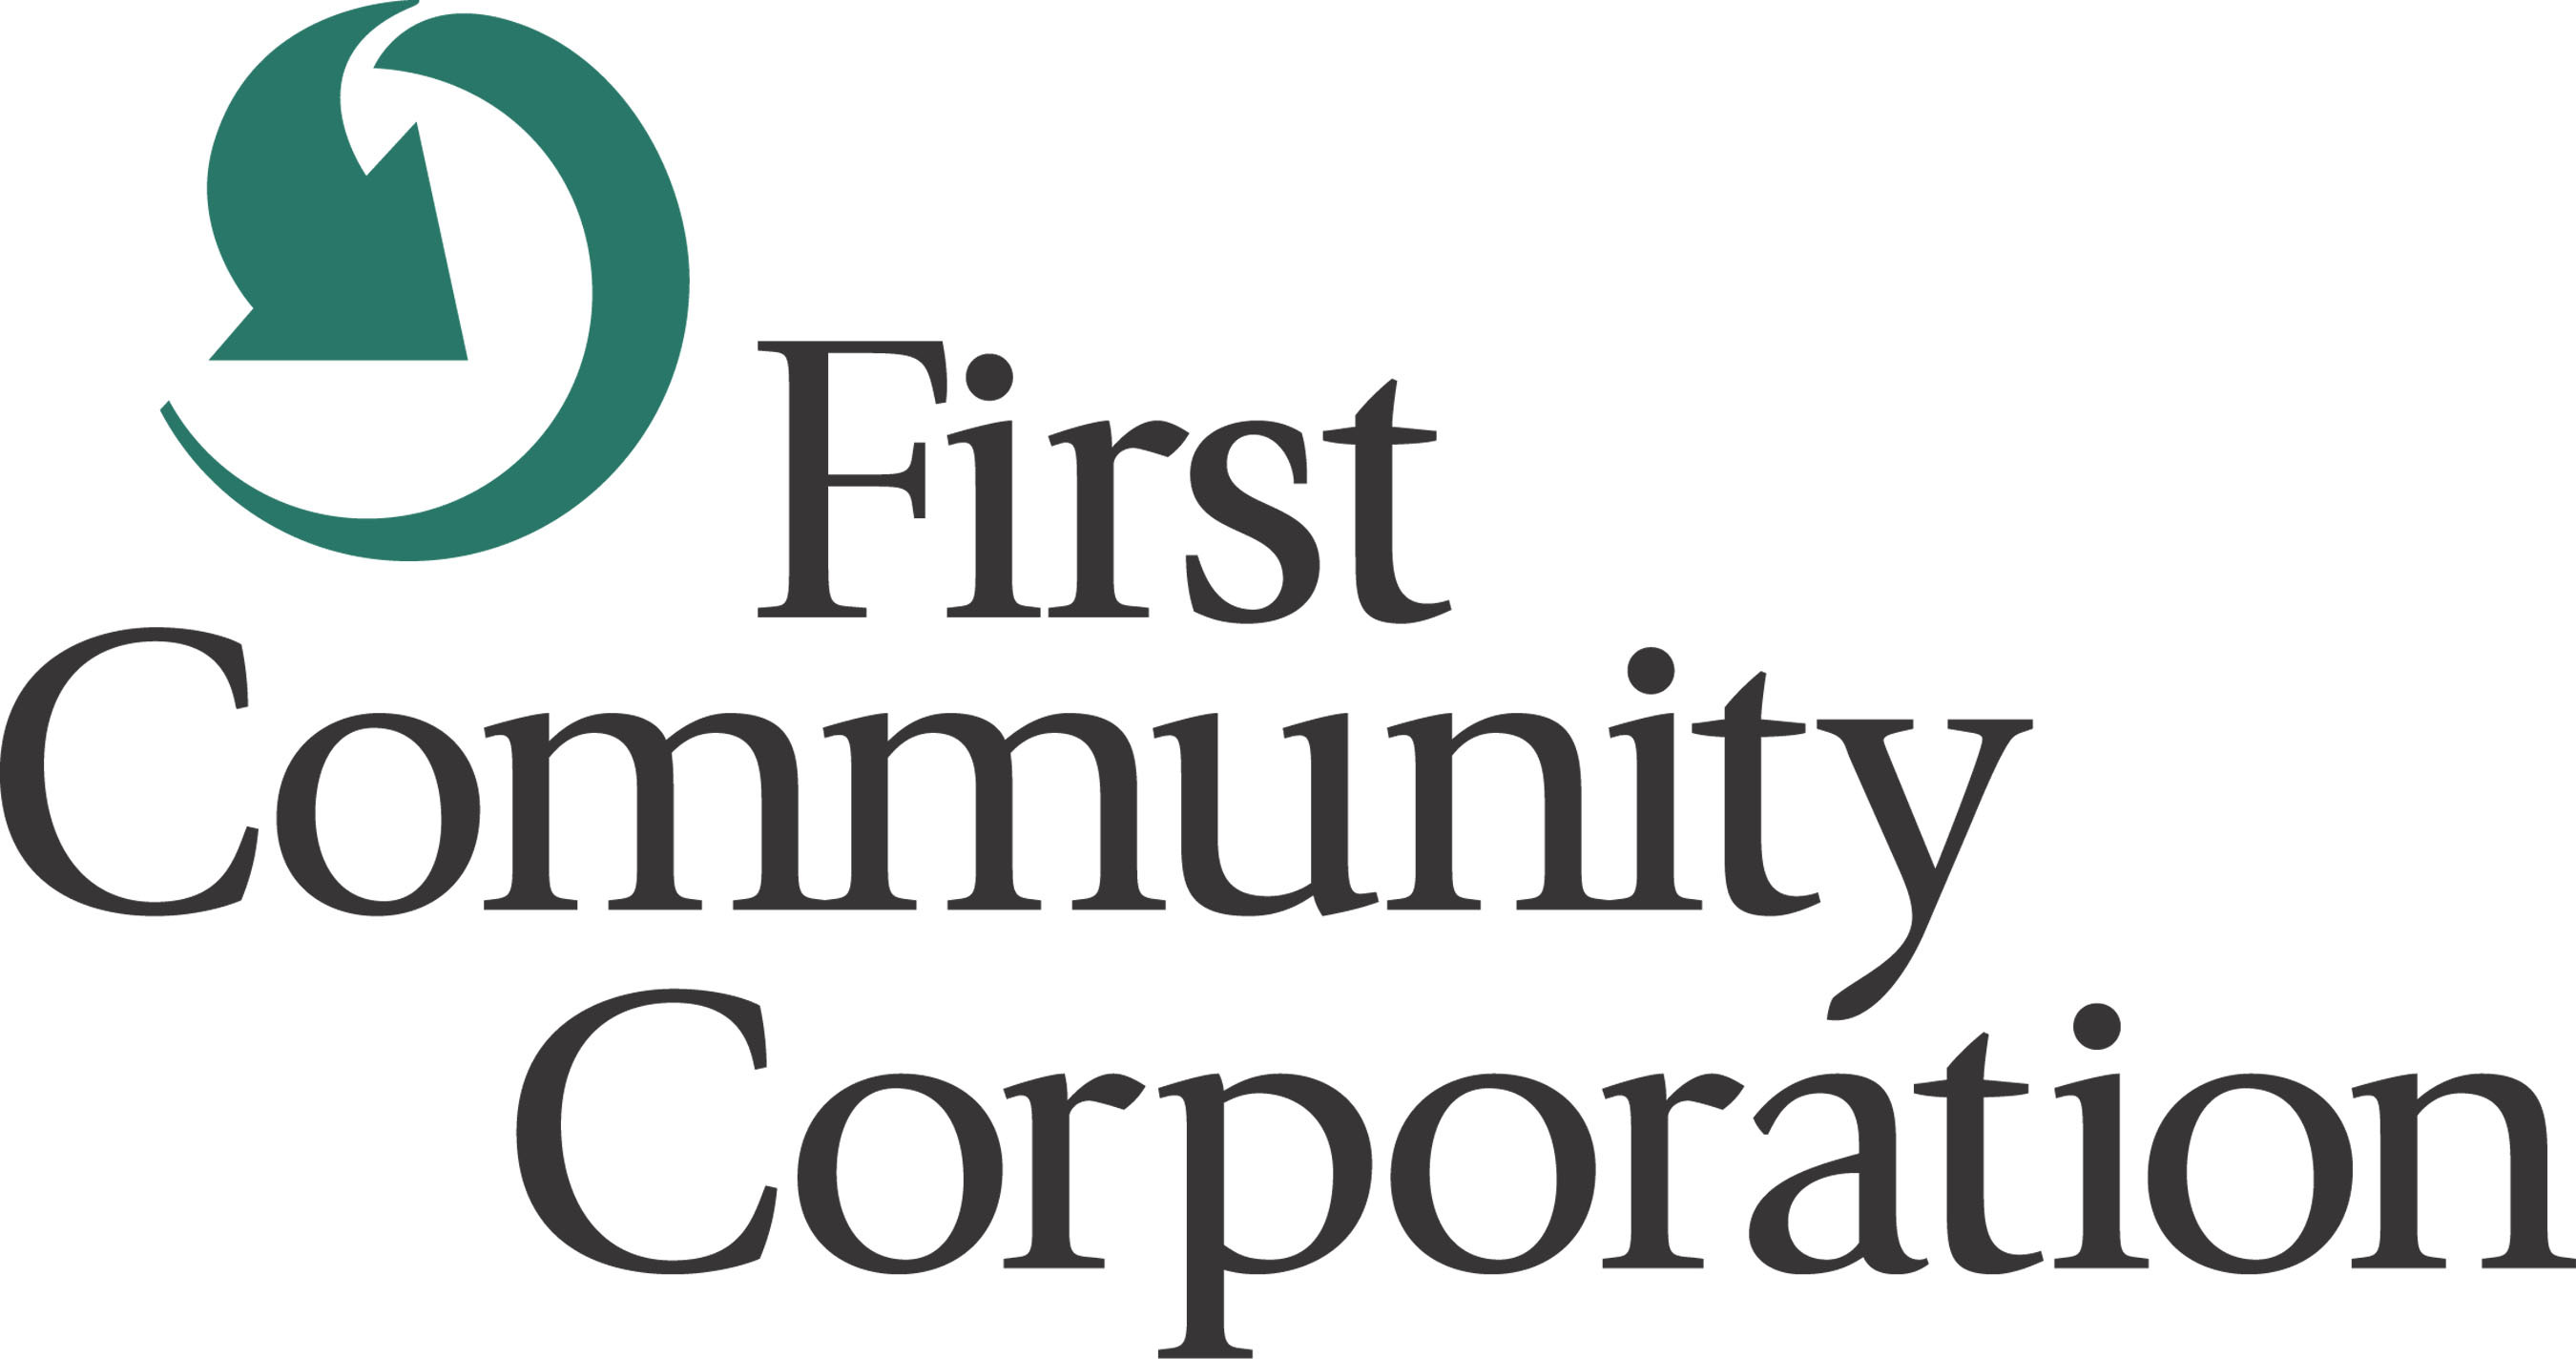 First Community Corporation logo.